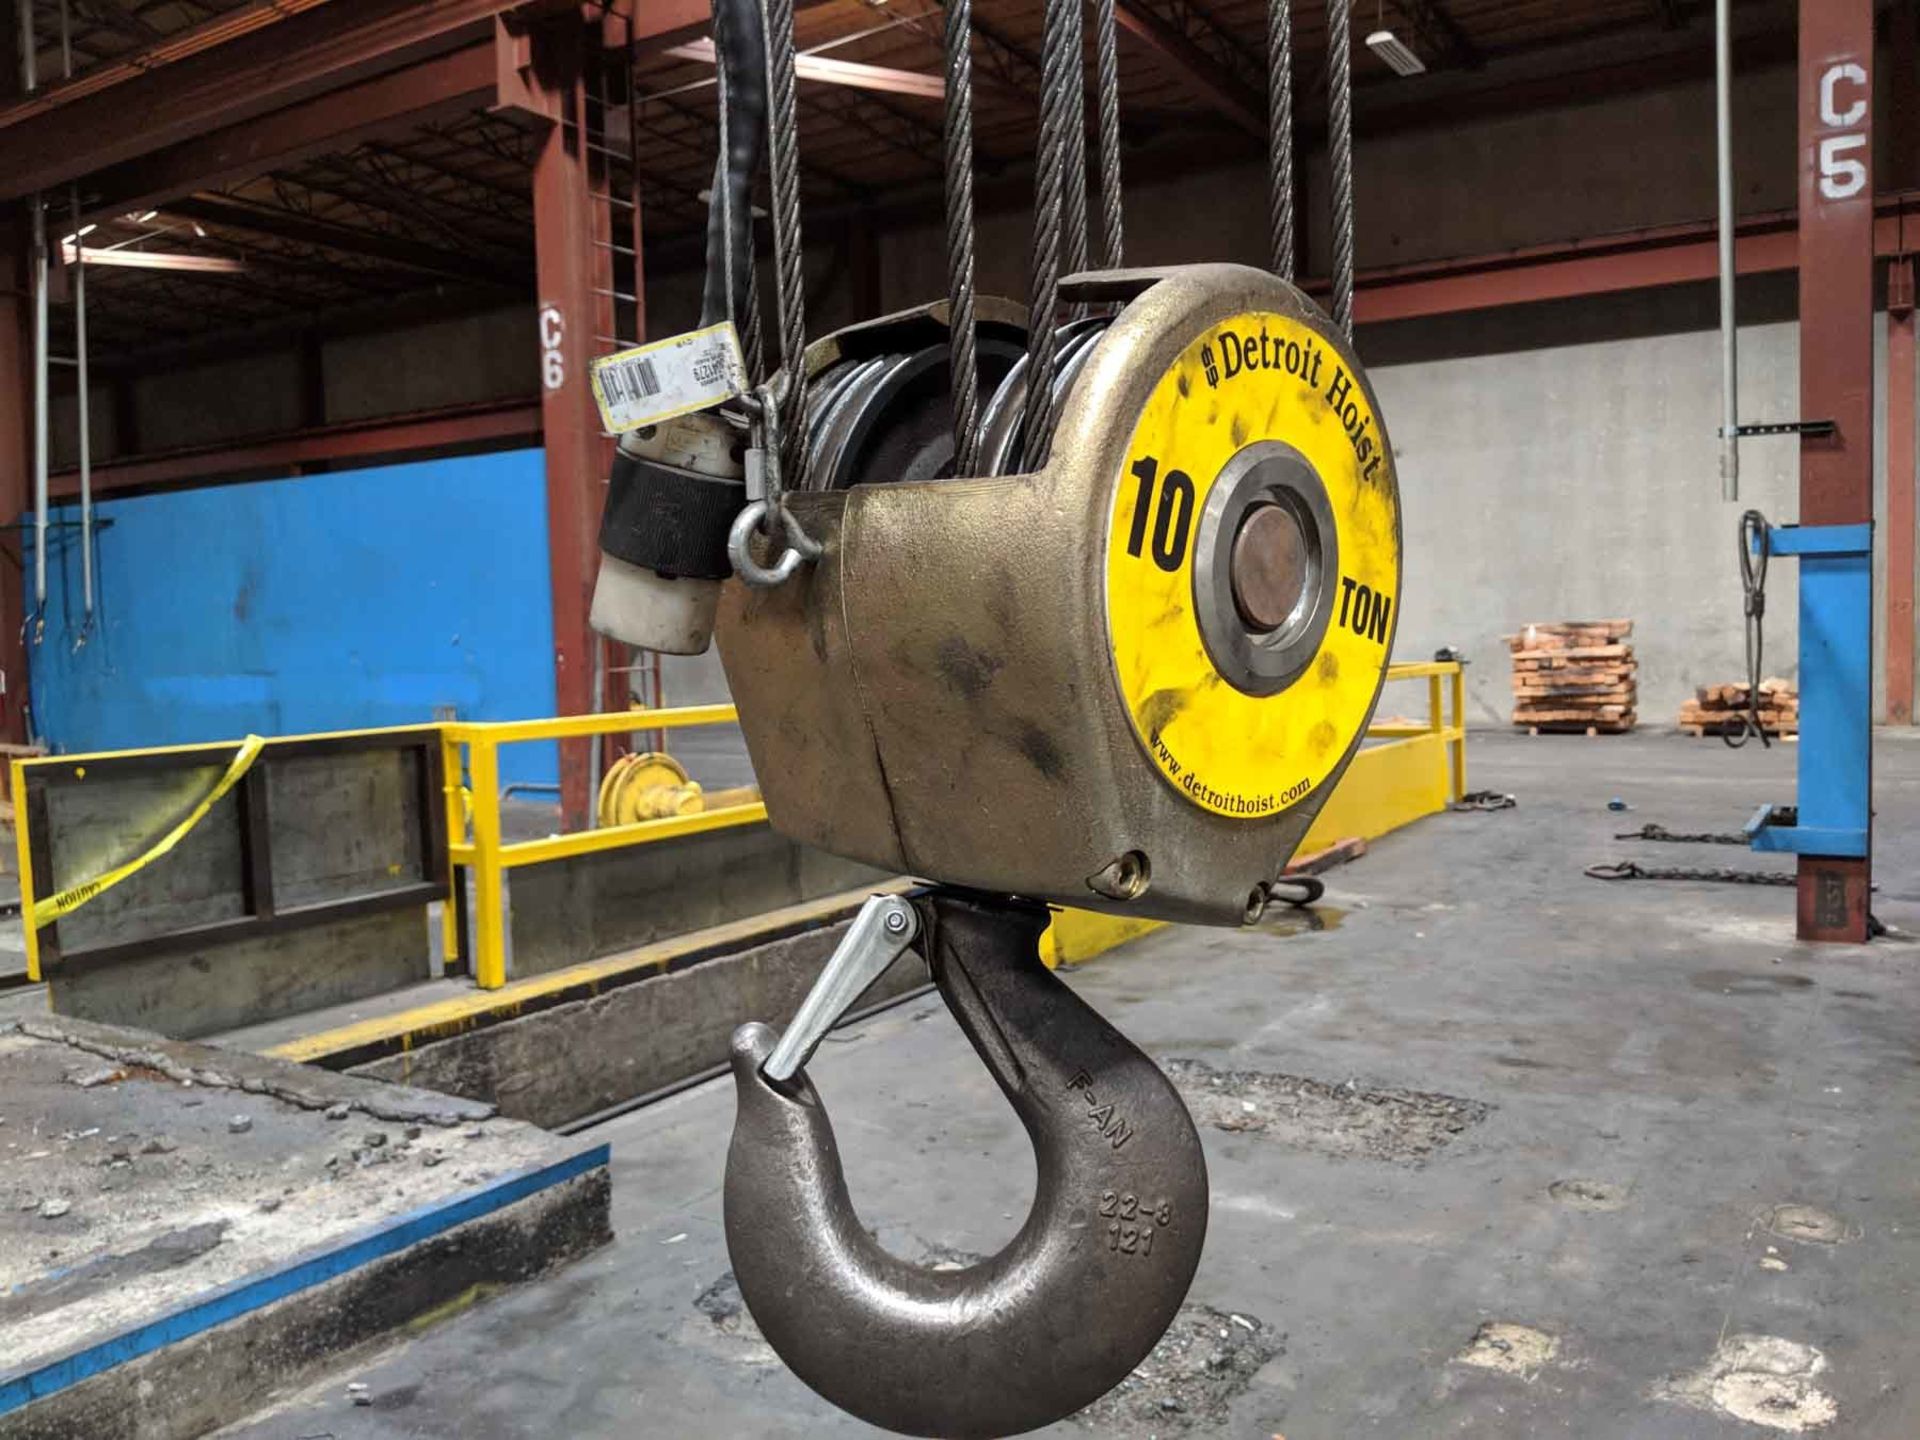 10-Ton Detroit Power Hoist and Trolley For Bridgecrane Material Handling Crane - Located In: Pomona, - Image 4 of 4